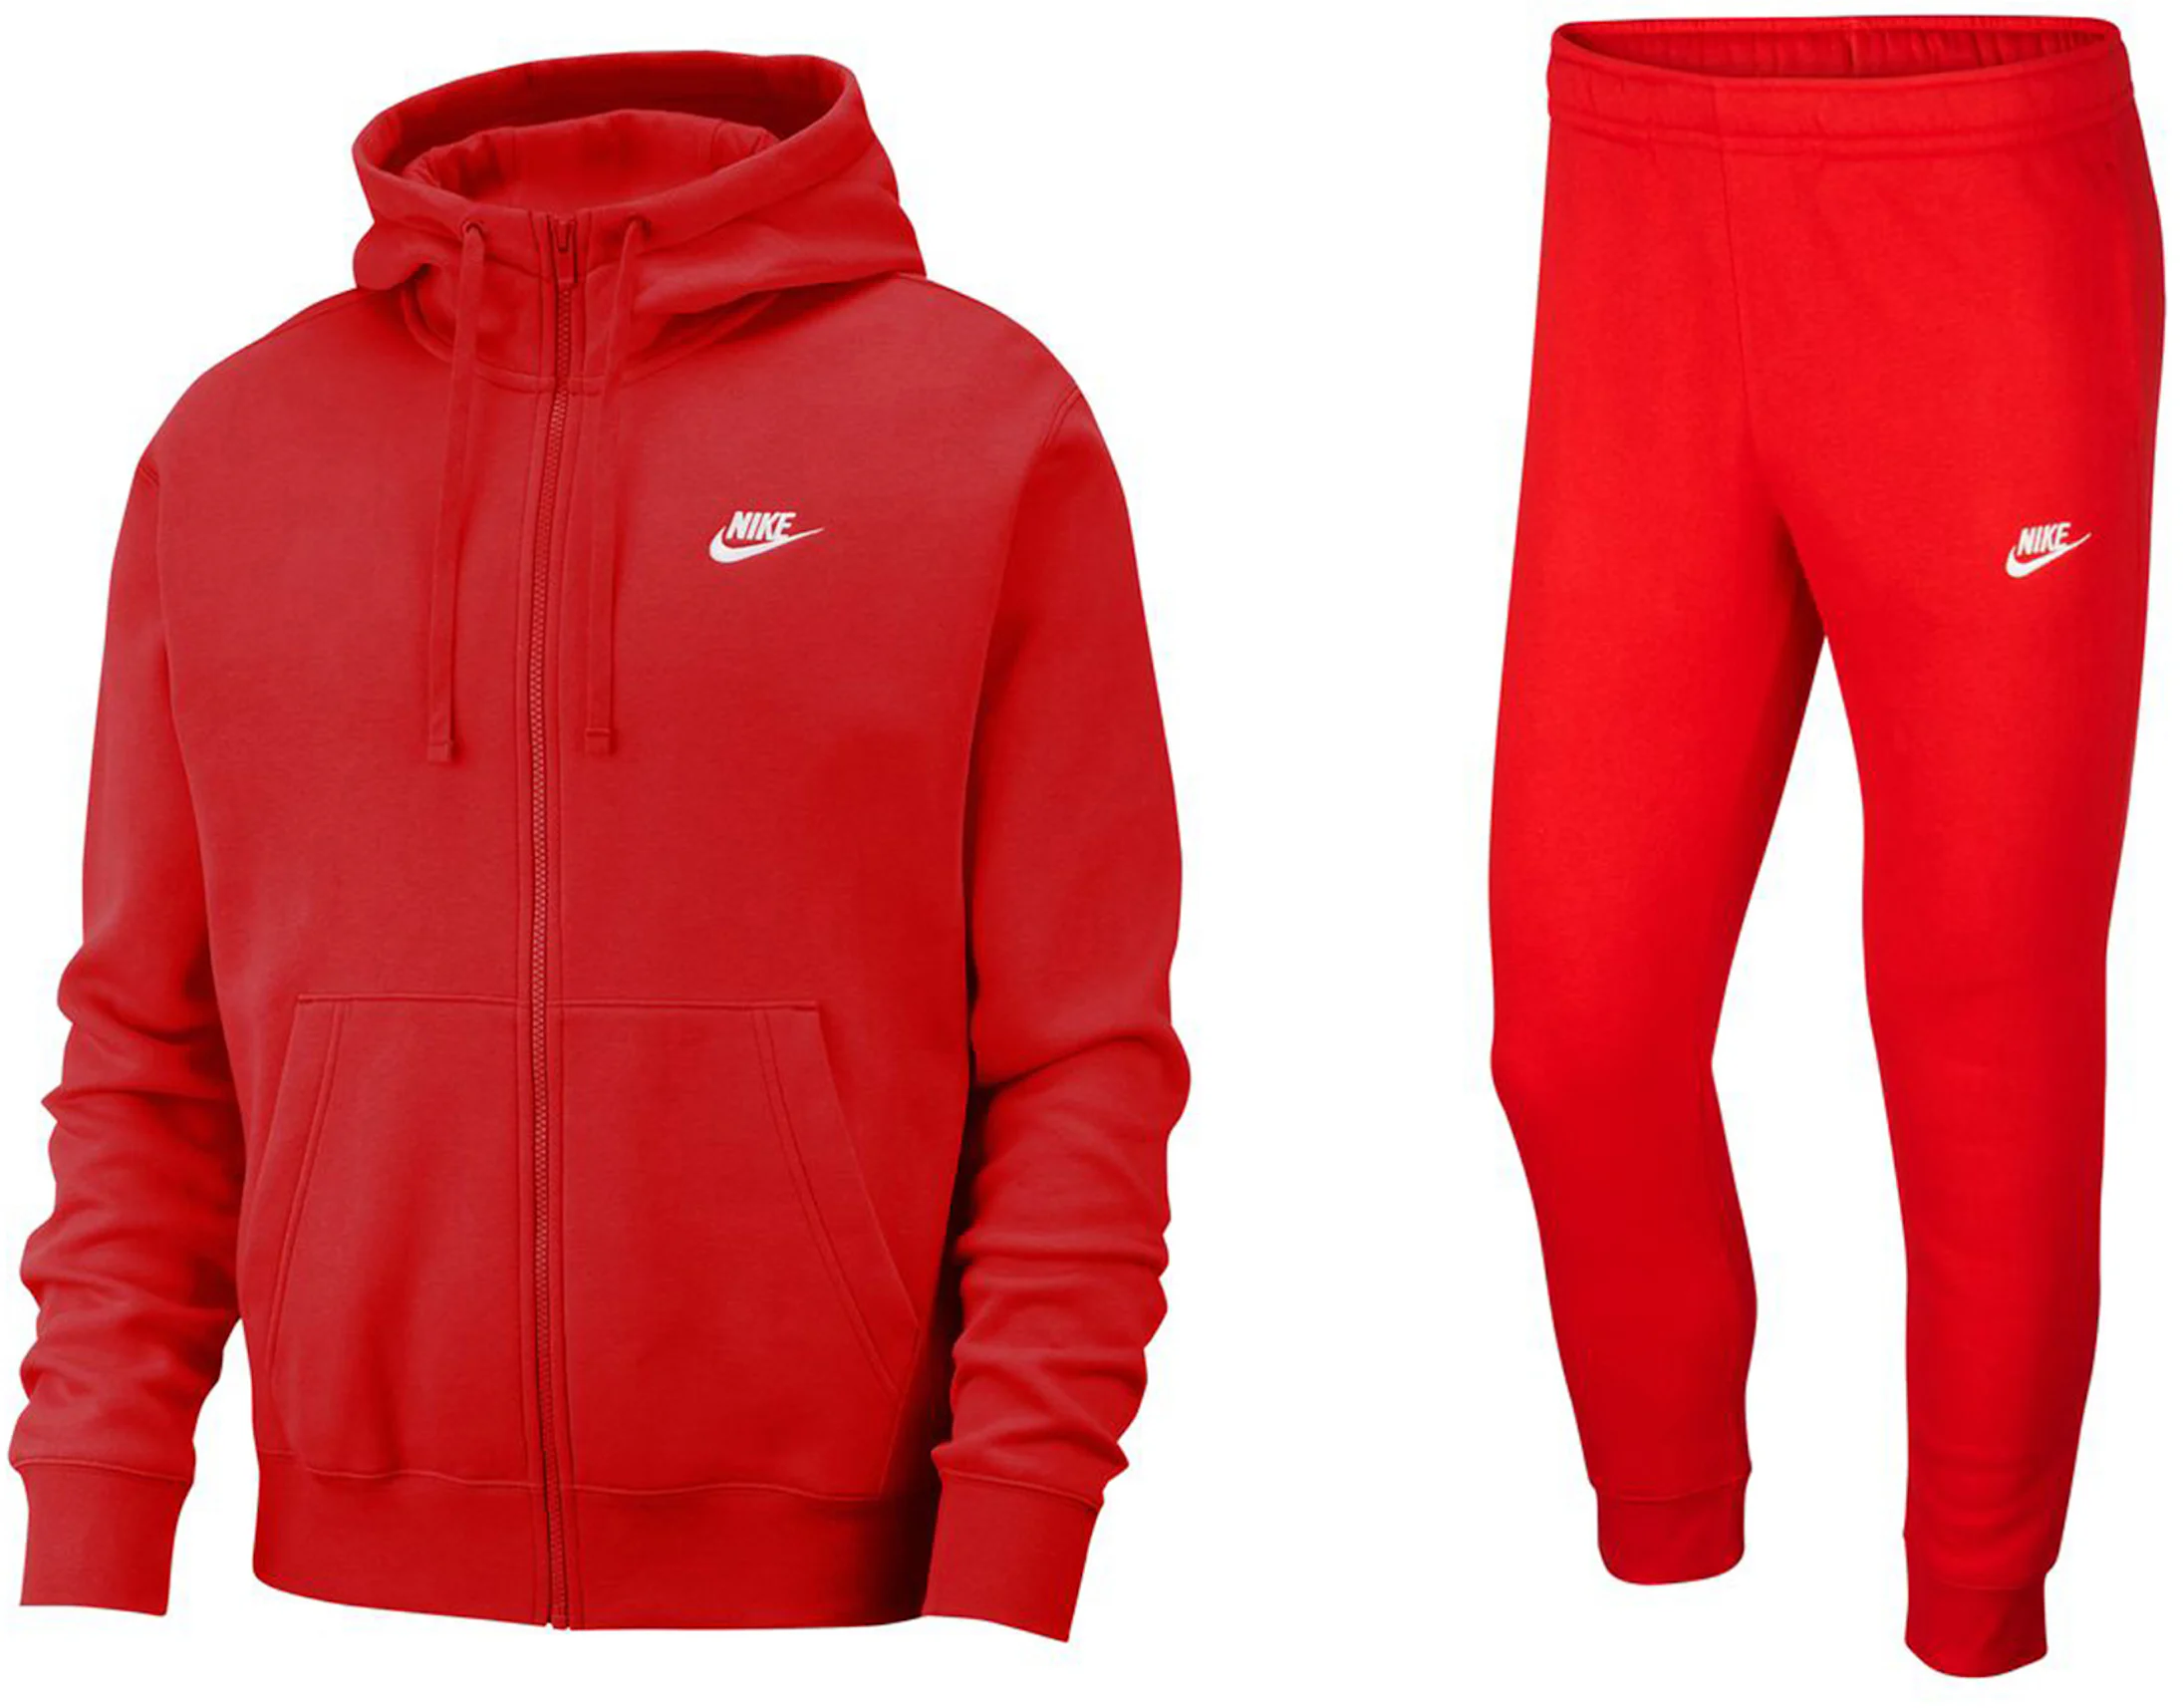 https://images.stockx.com/images/Nike-Sportswear-Club-Fleece-Full-Zip-Hoodie-Joggers-Set-University-Red-University-Red-White.jpg?fit=fill&bg=FFFFFF&w=1200&h=857&fm=webp&auto=compress&dpr=2&trim=color&updated_at=1676666829&q=60